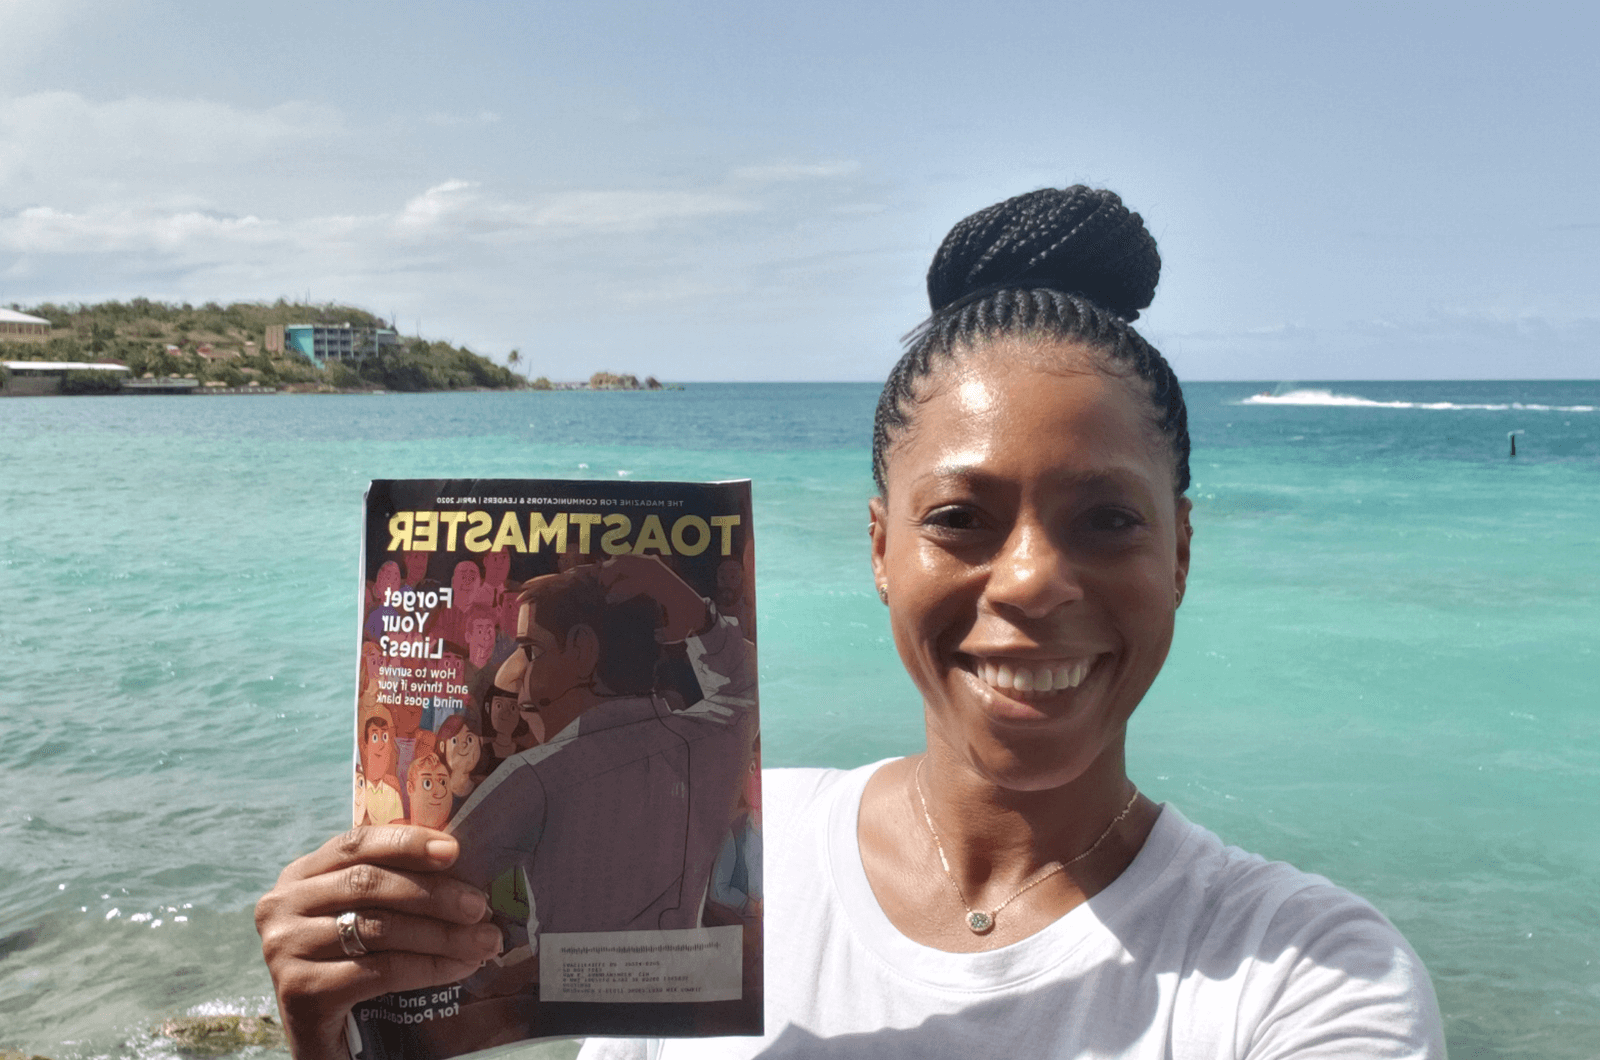 Ava VanHeyningen of Fayetteville, Georgia, snaps a selfie with her Toastmaster at Lindbergh Bay Beach in St. Thomas, U.S. Virgin Islands. 